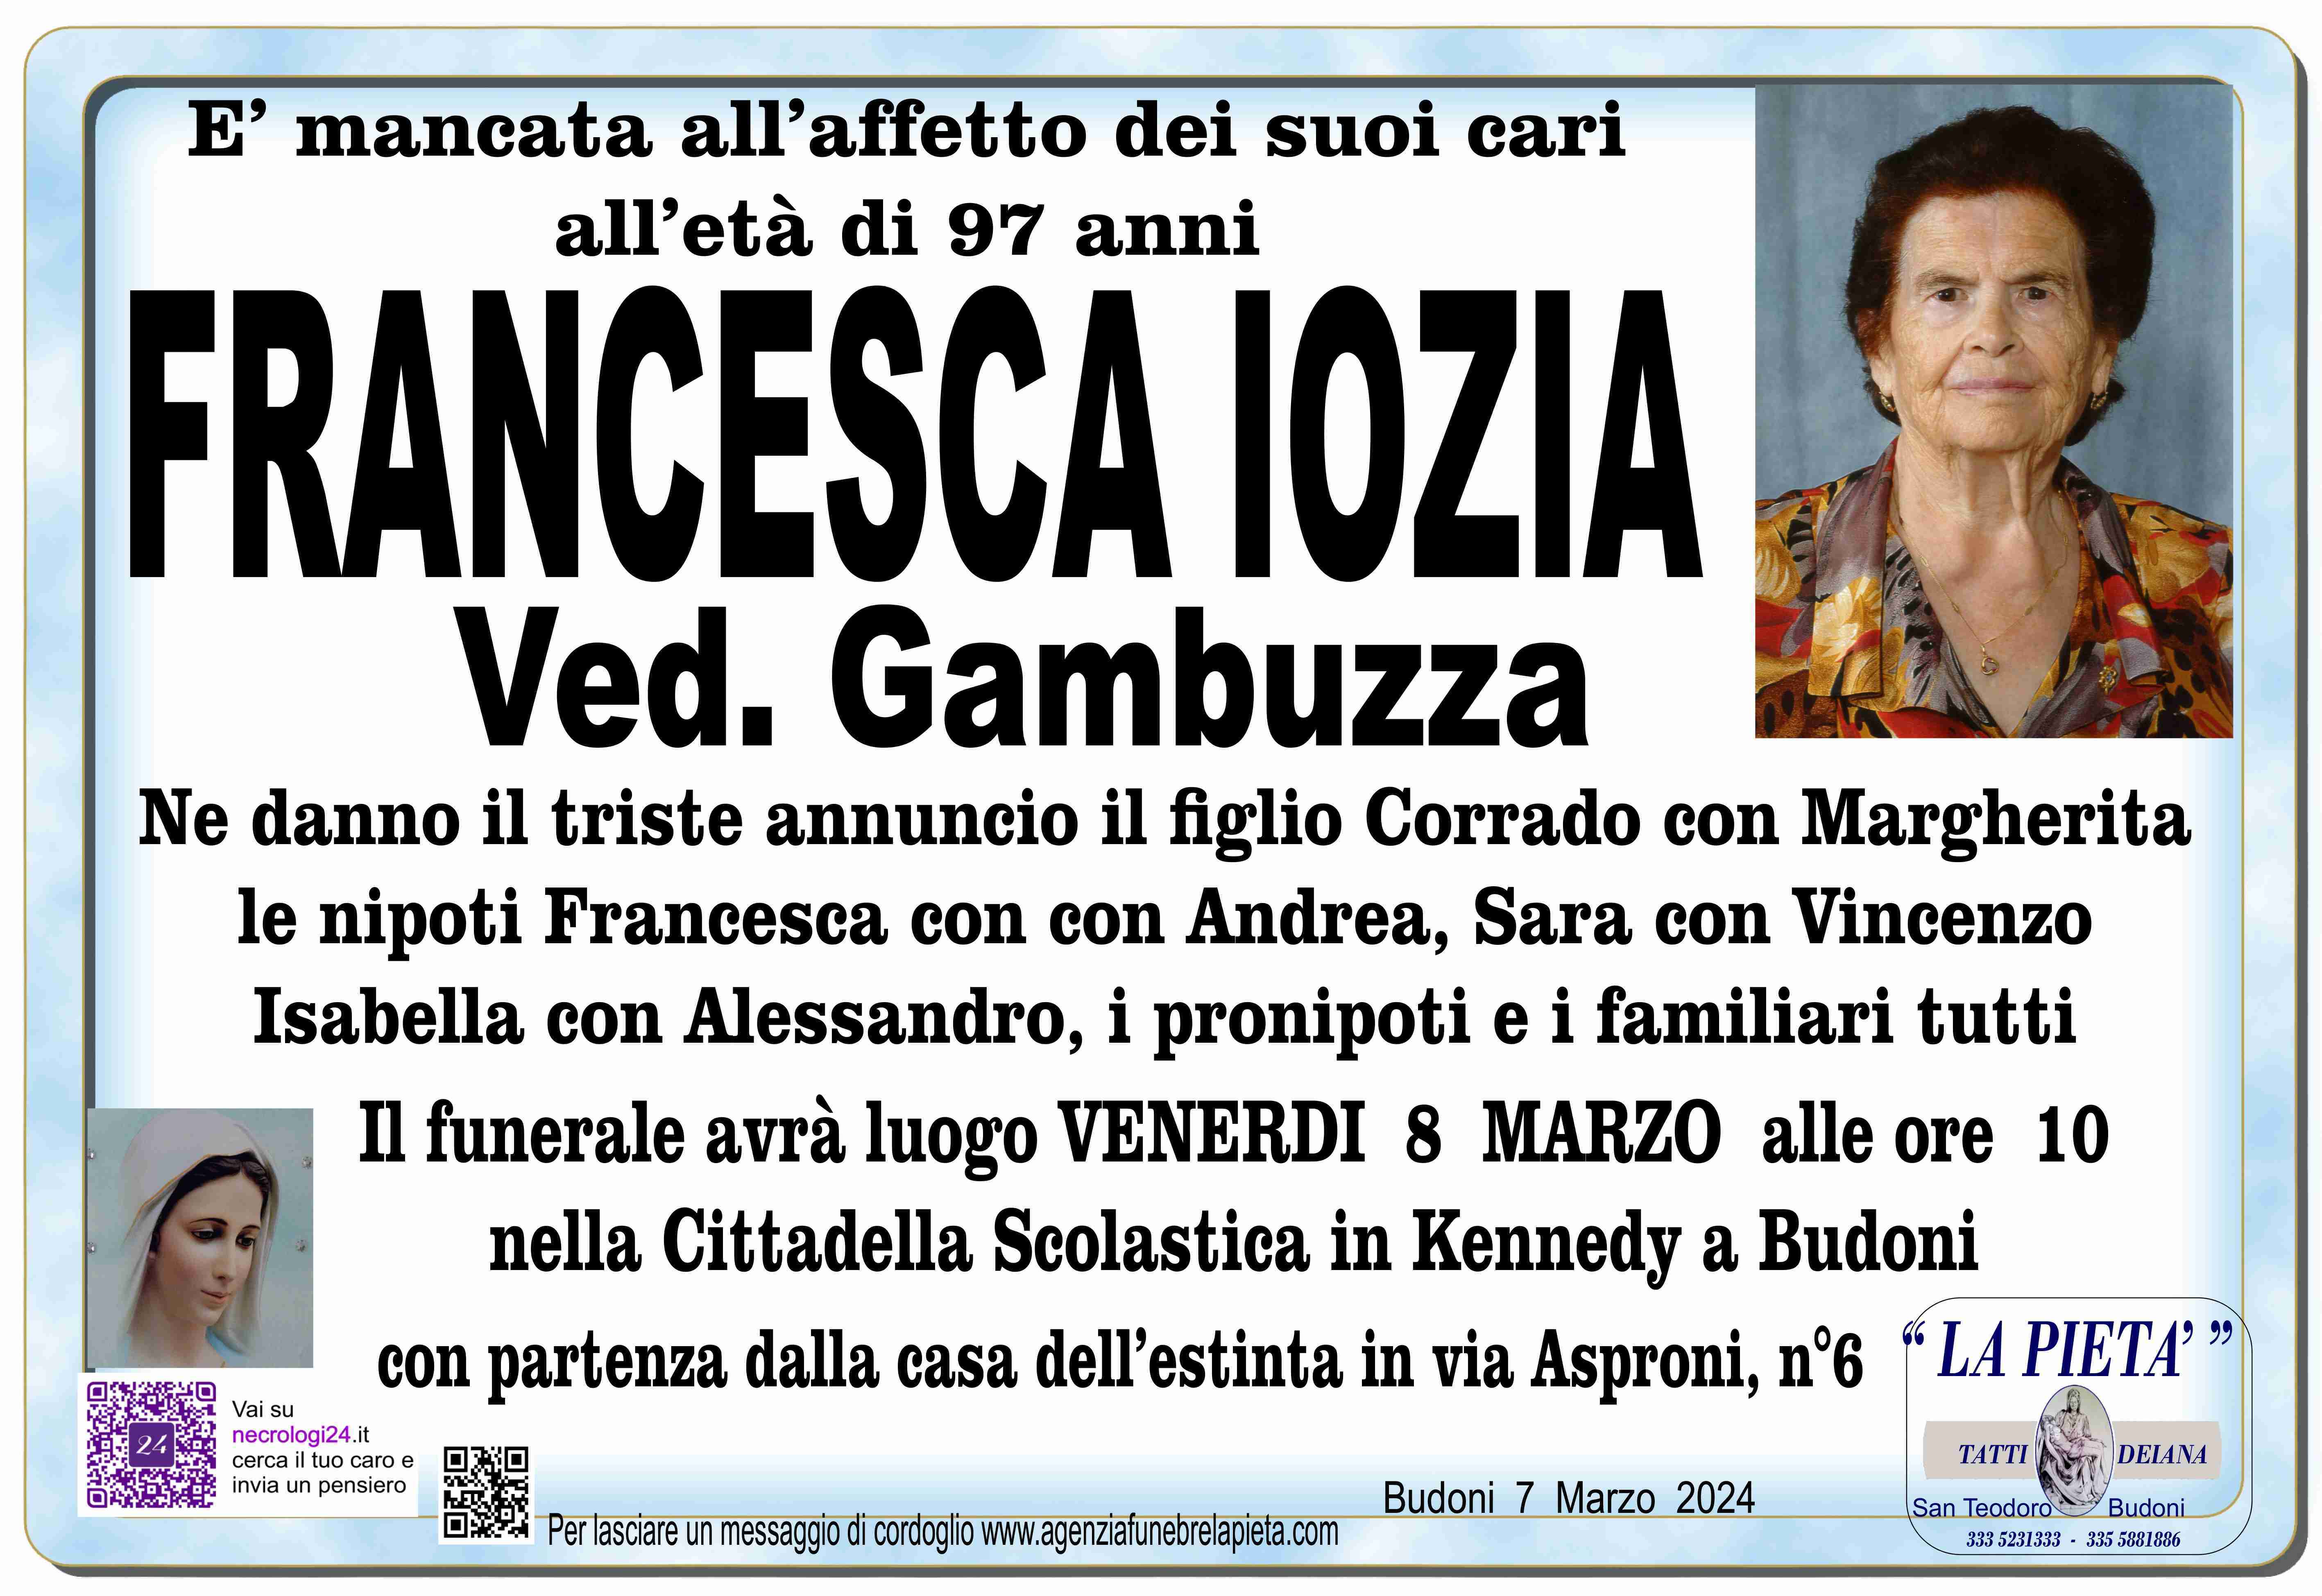 Francesca Iozia